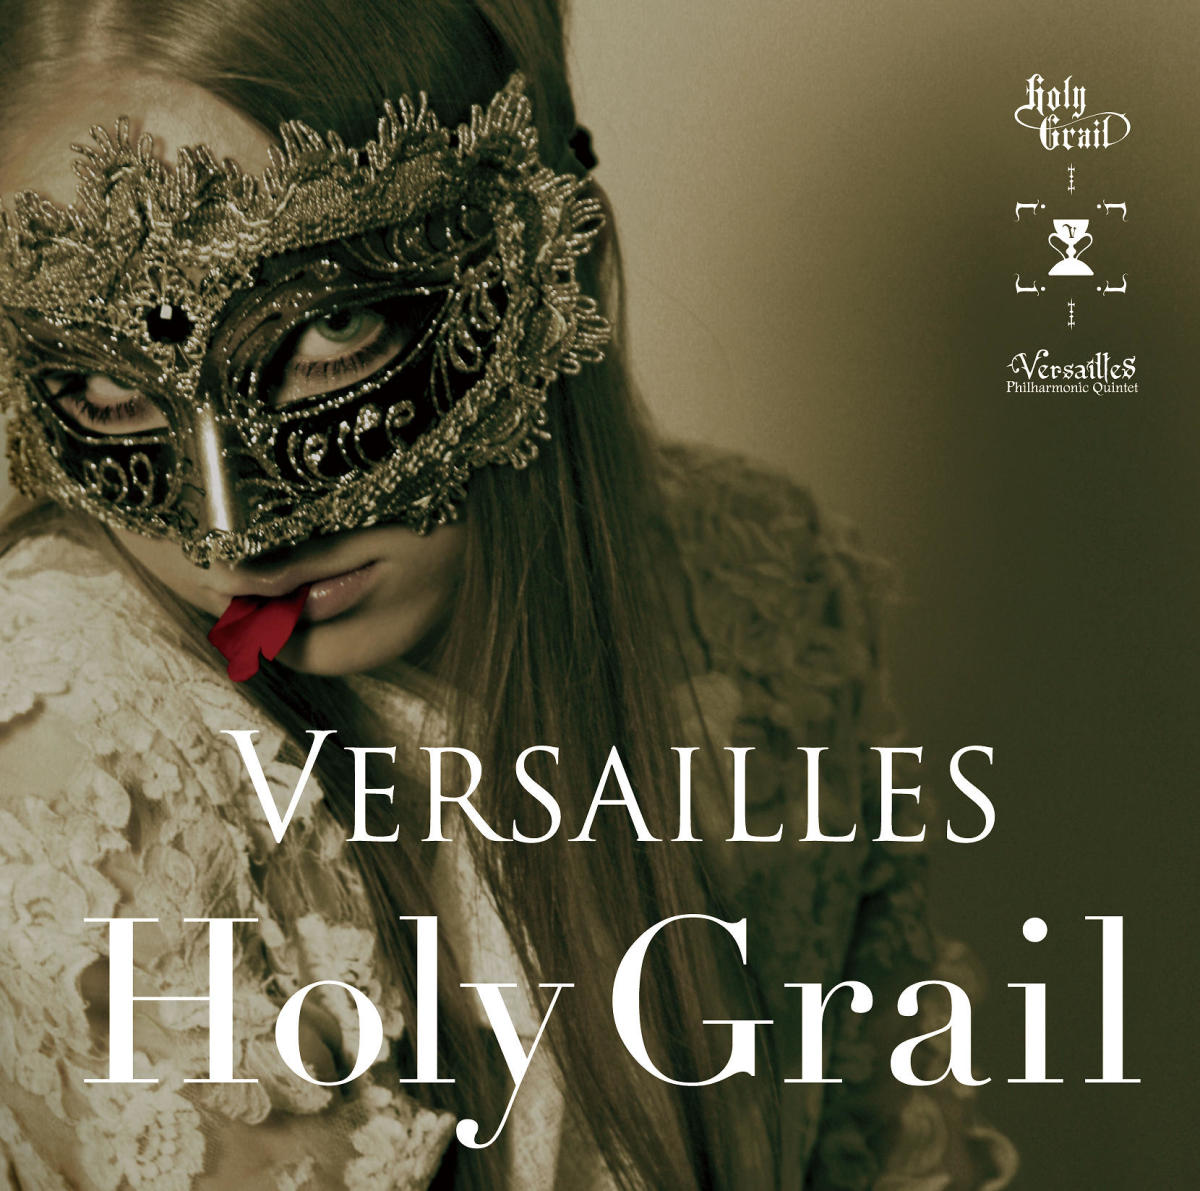 Versailles - Holy Grail